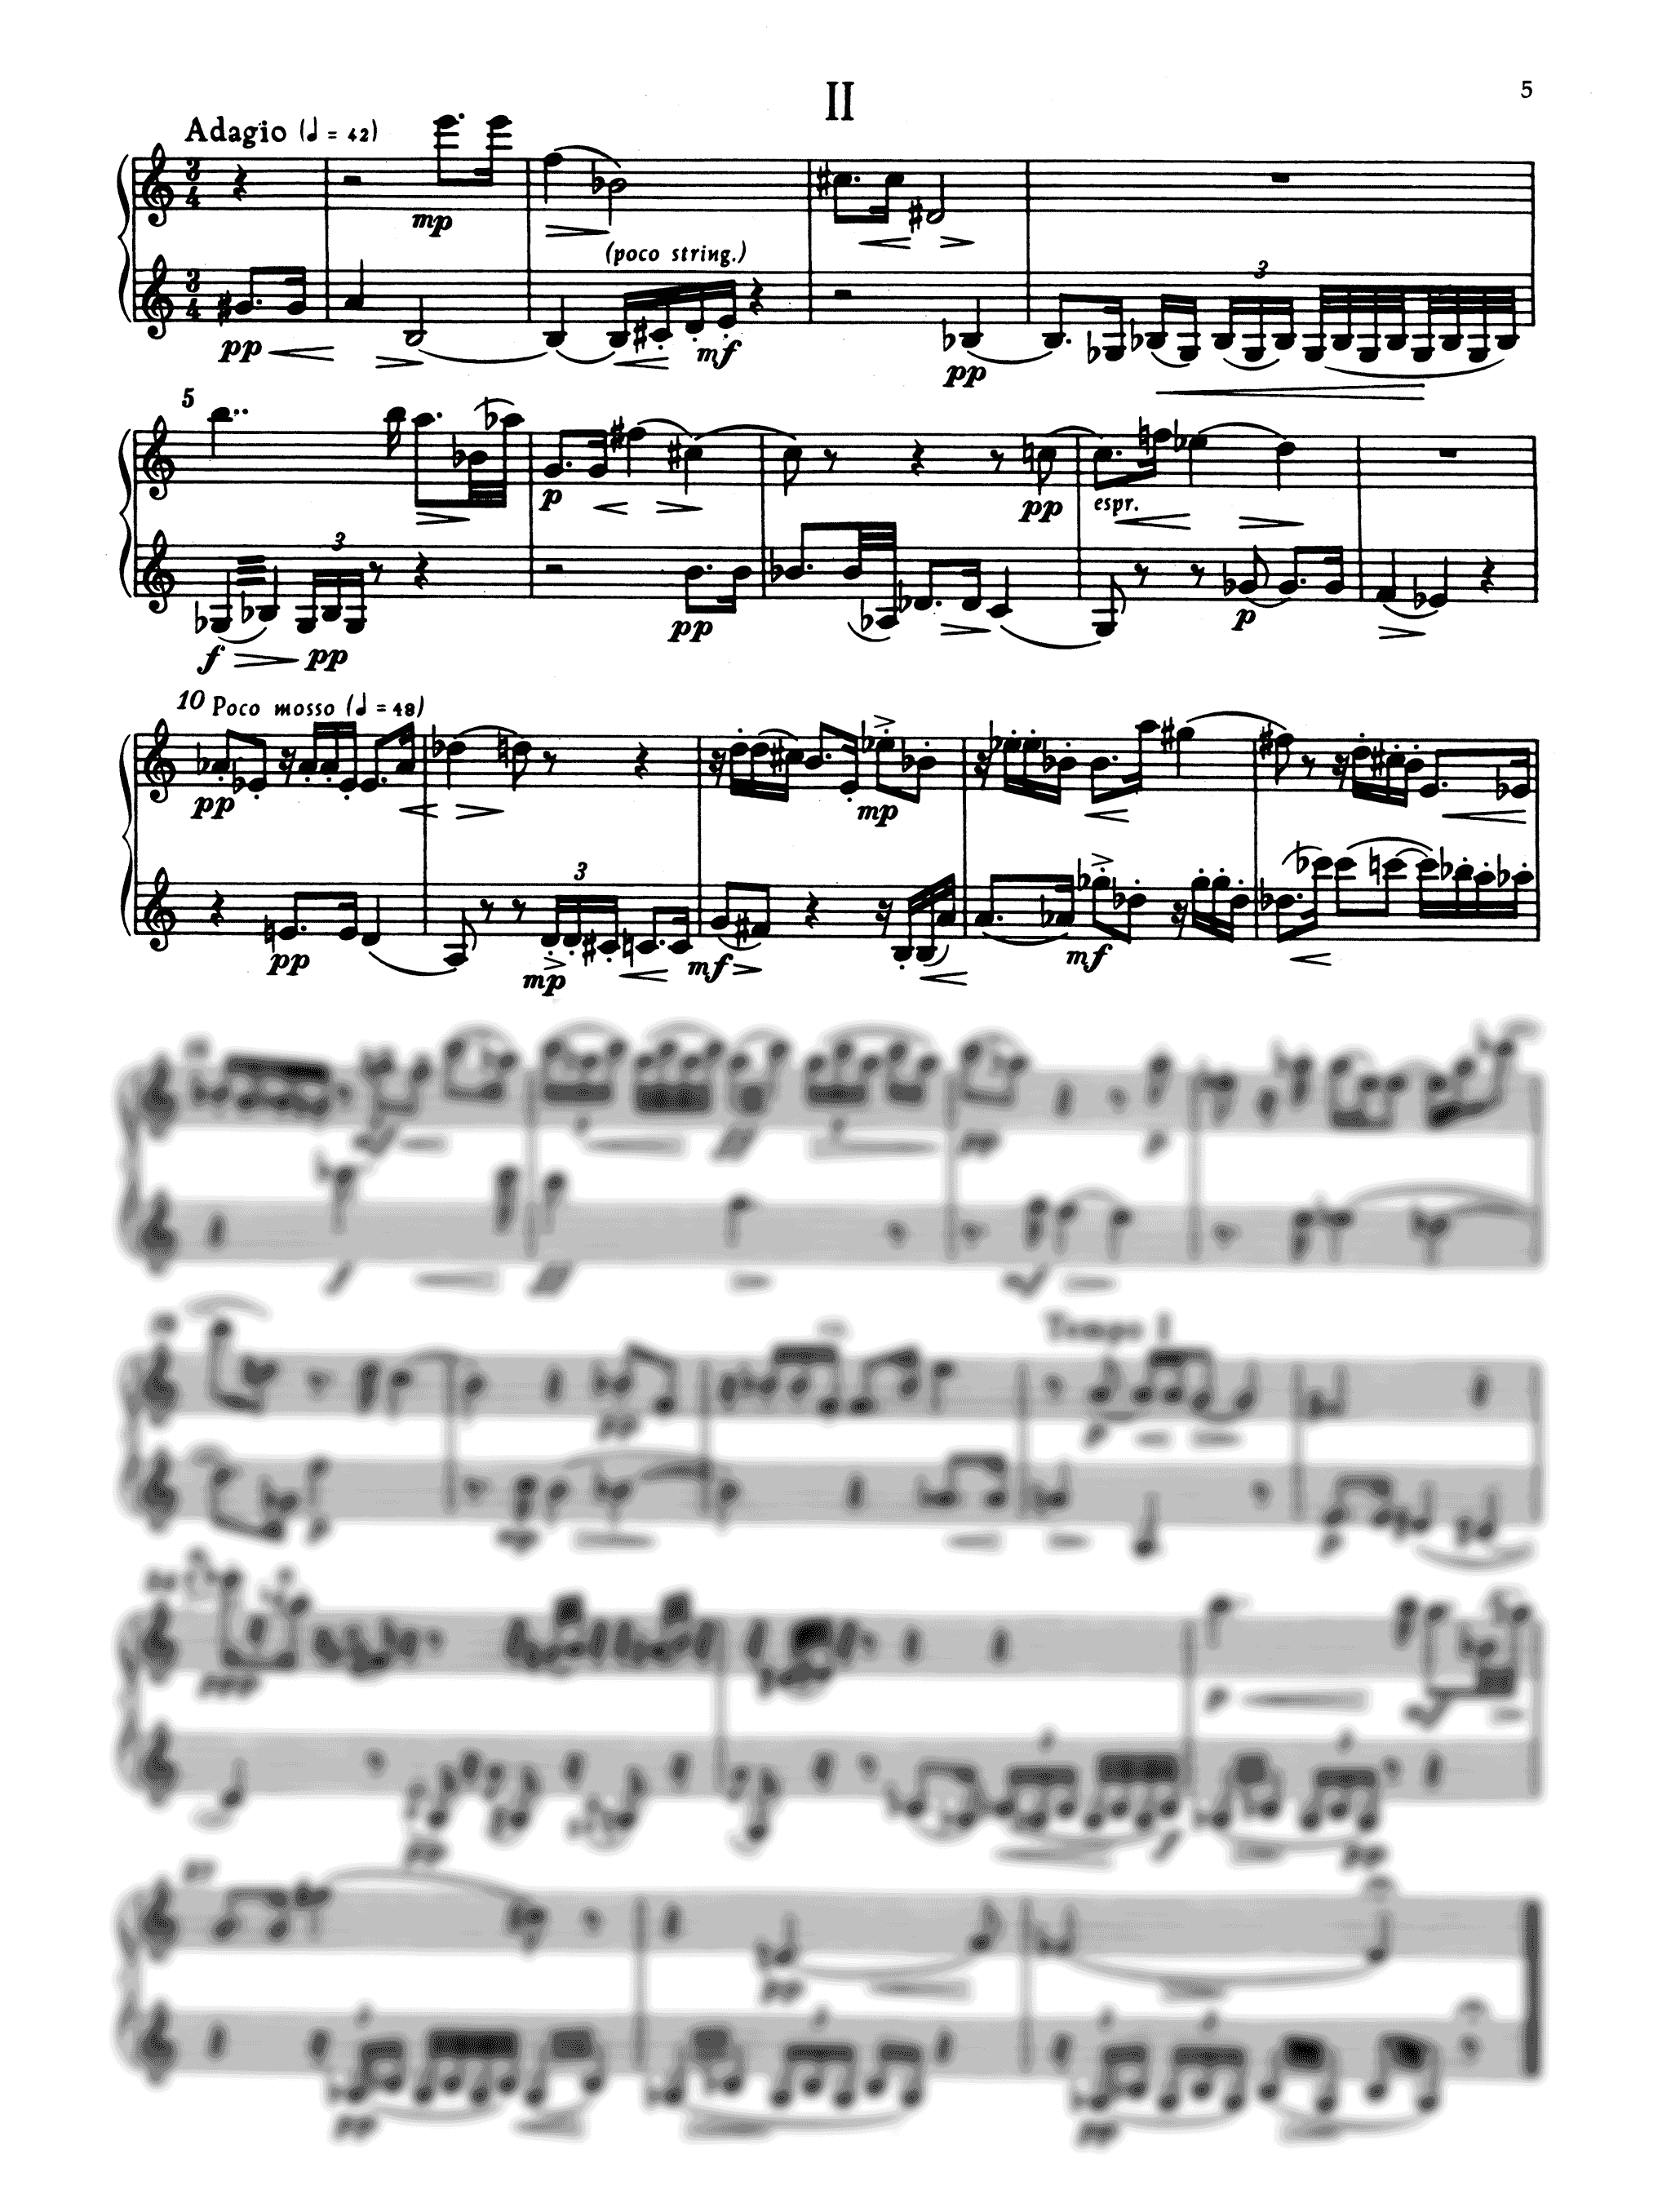 Krenek Sonatina, Op. 92/2b - Movement 2